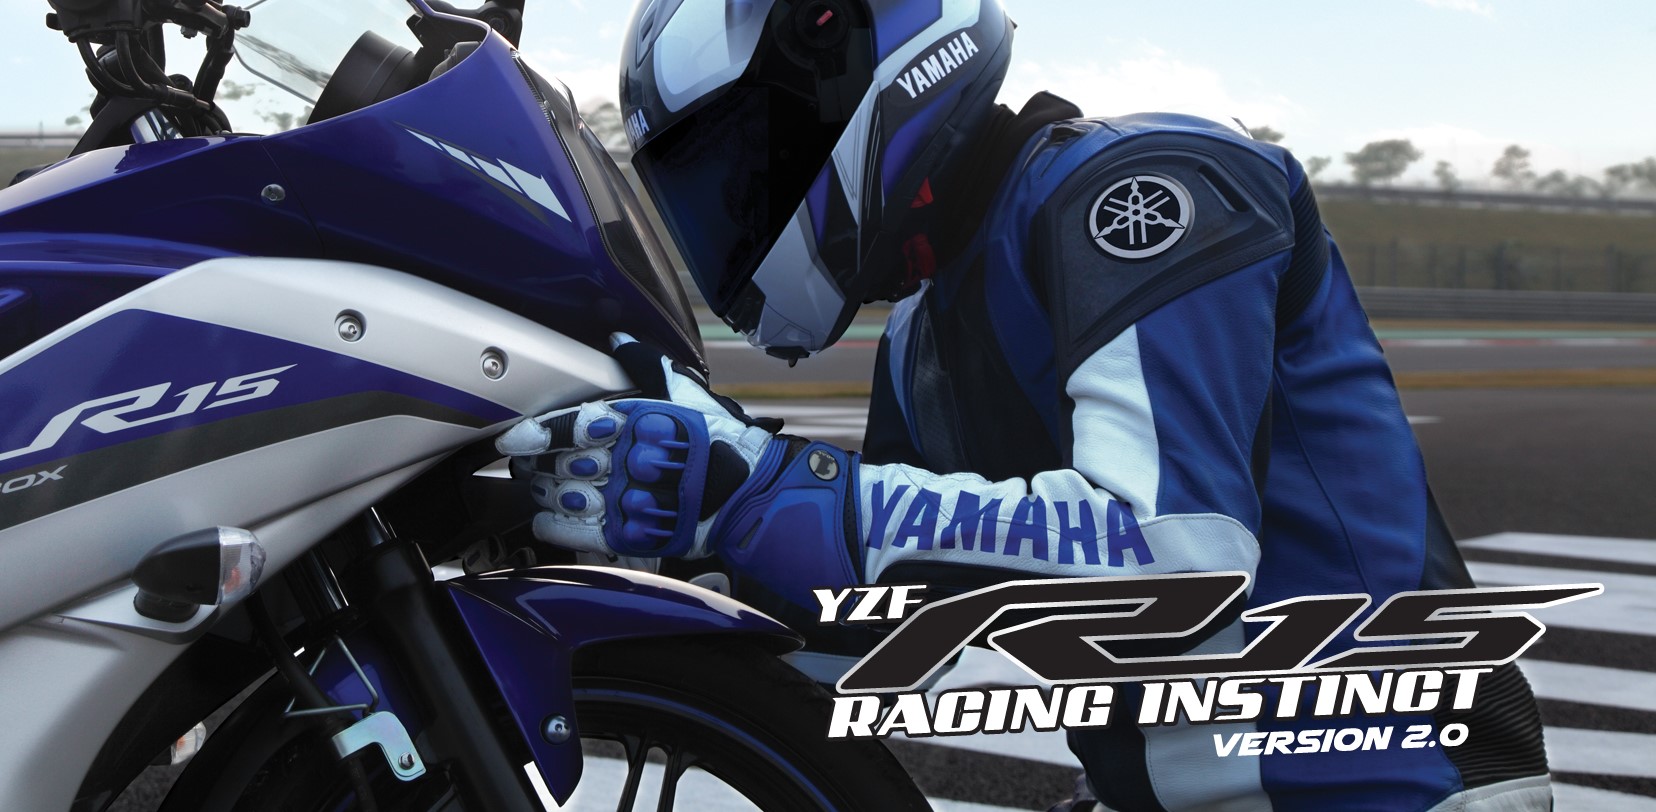 Yamaha R15 Gets Auto-Headlamp-On Feature